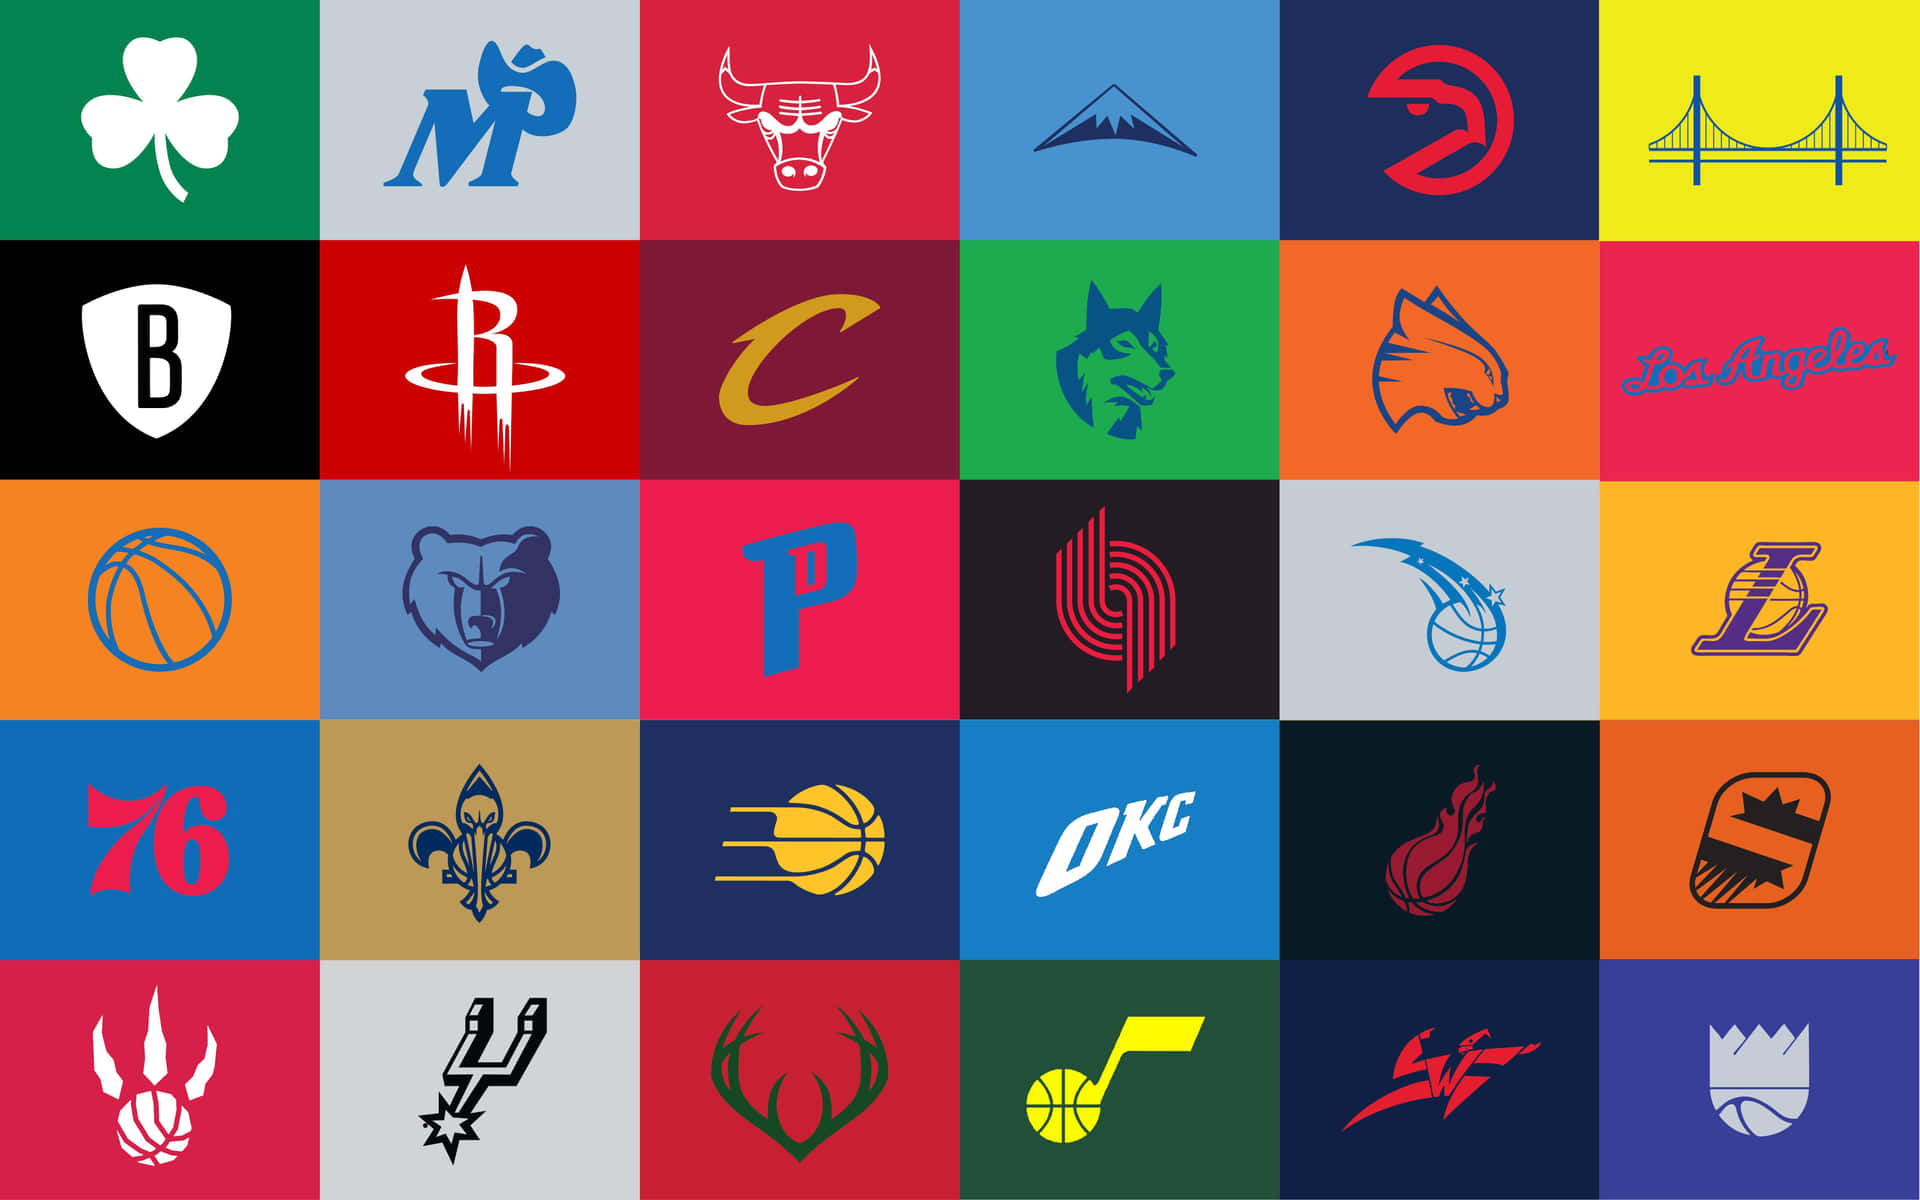 Simplified Team Nba Logos Wallpaper